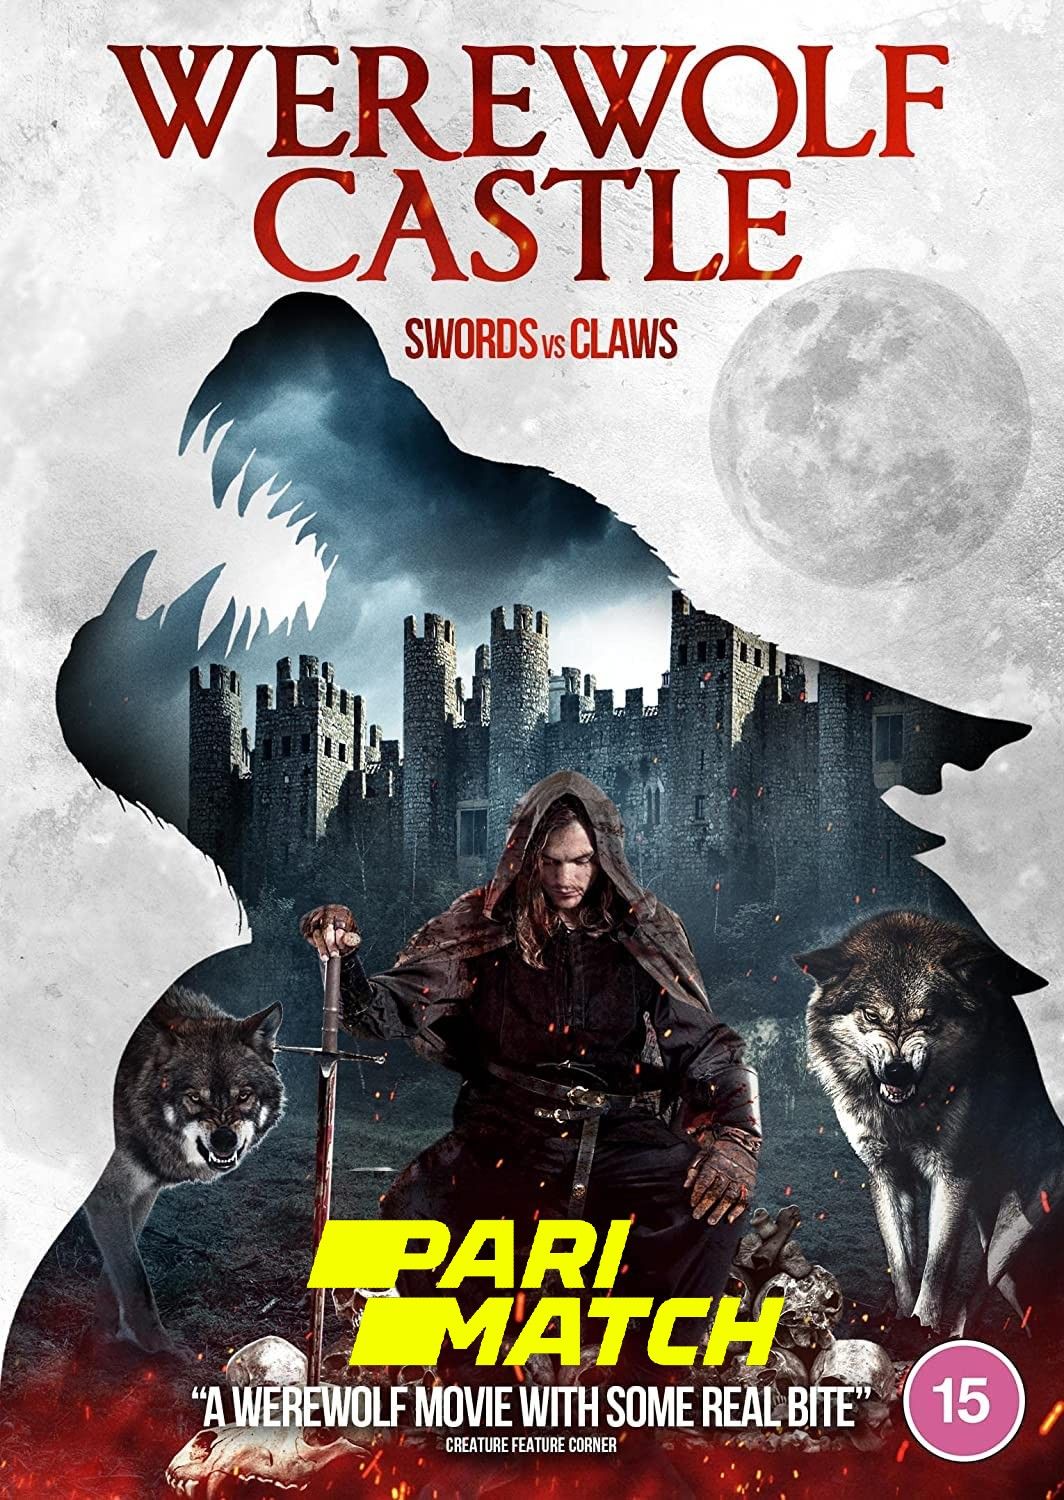 Werewolf Castle (2021) Bengali (Voice Over) Dubbed WEBRip download full movie